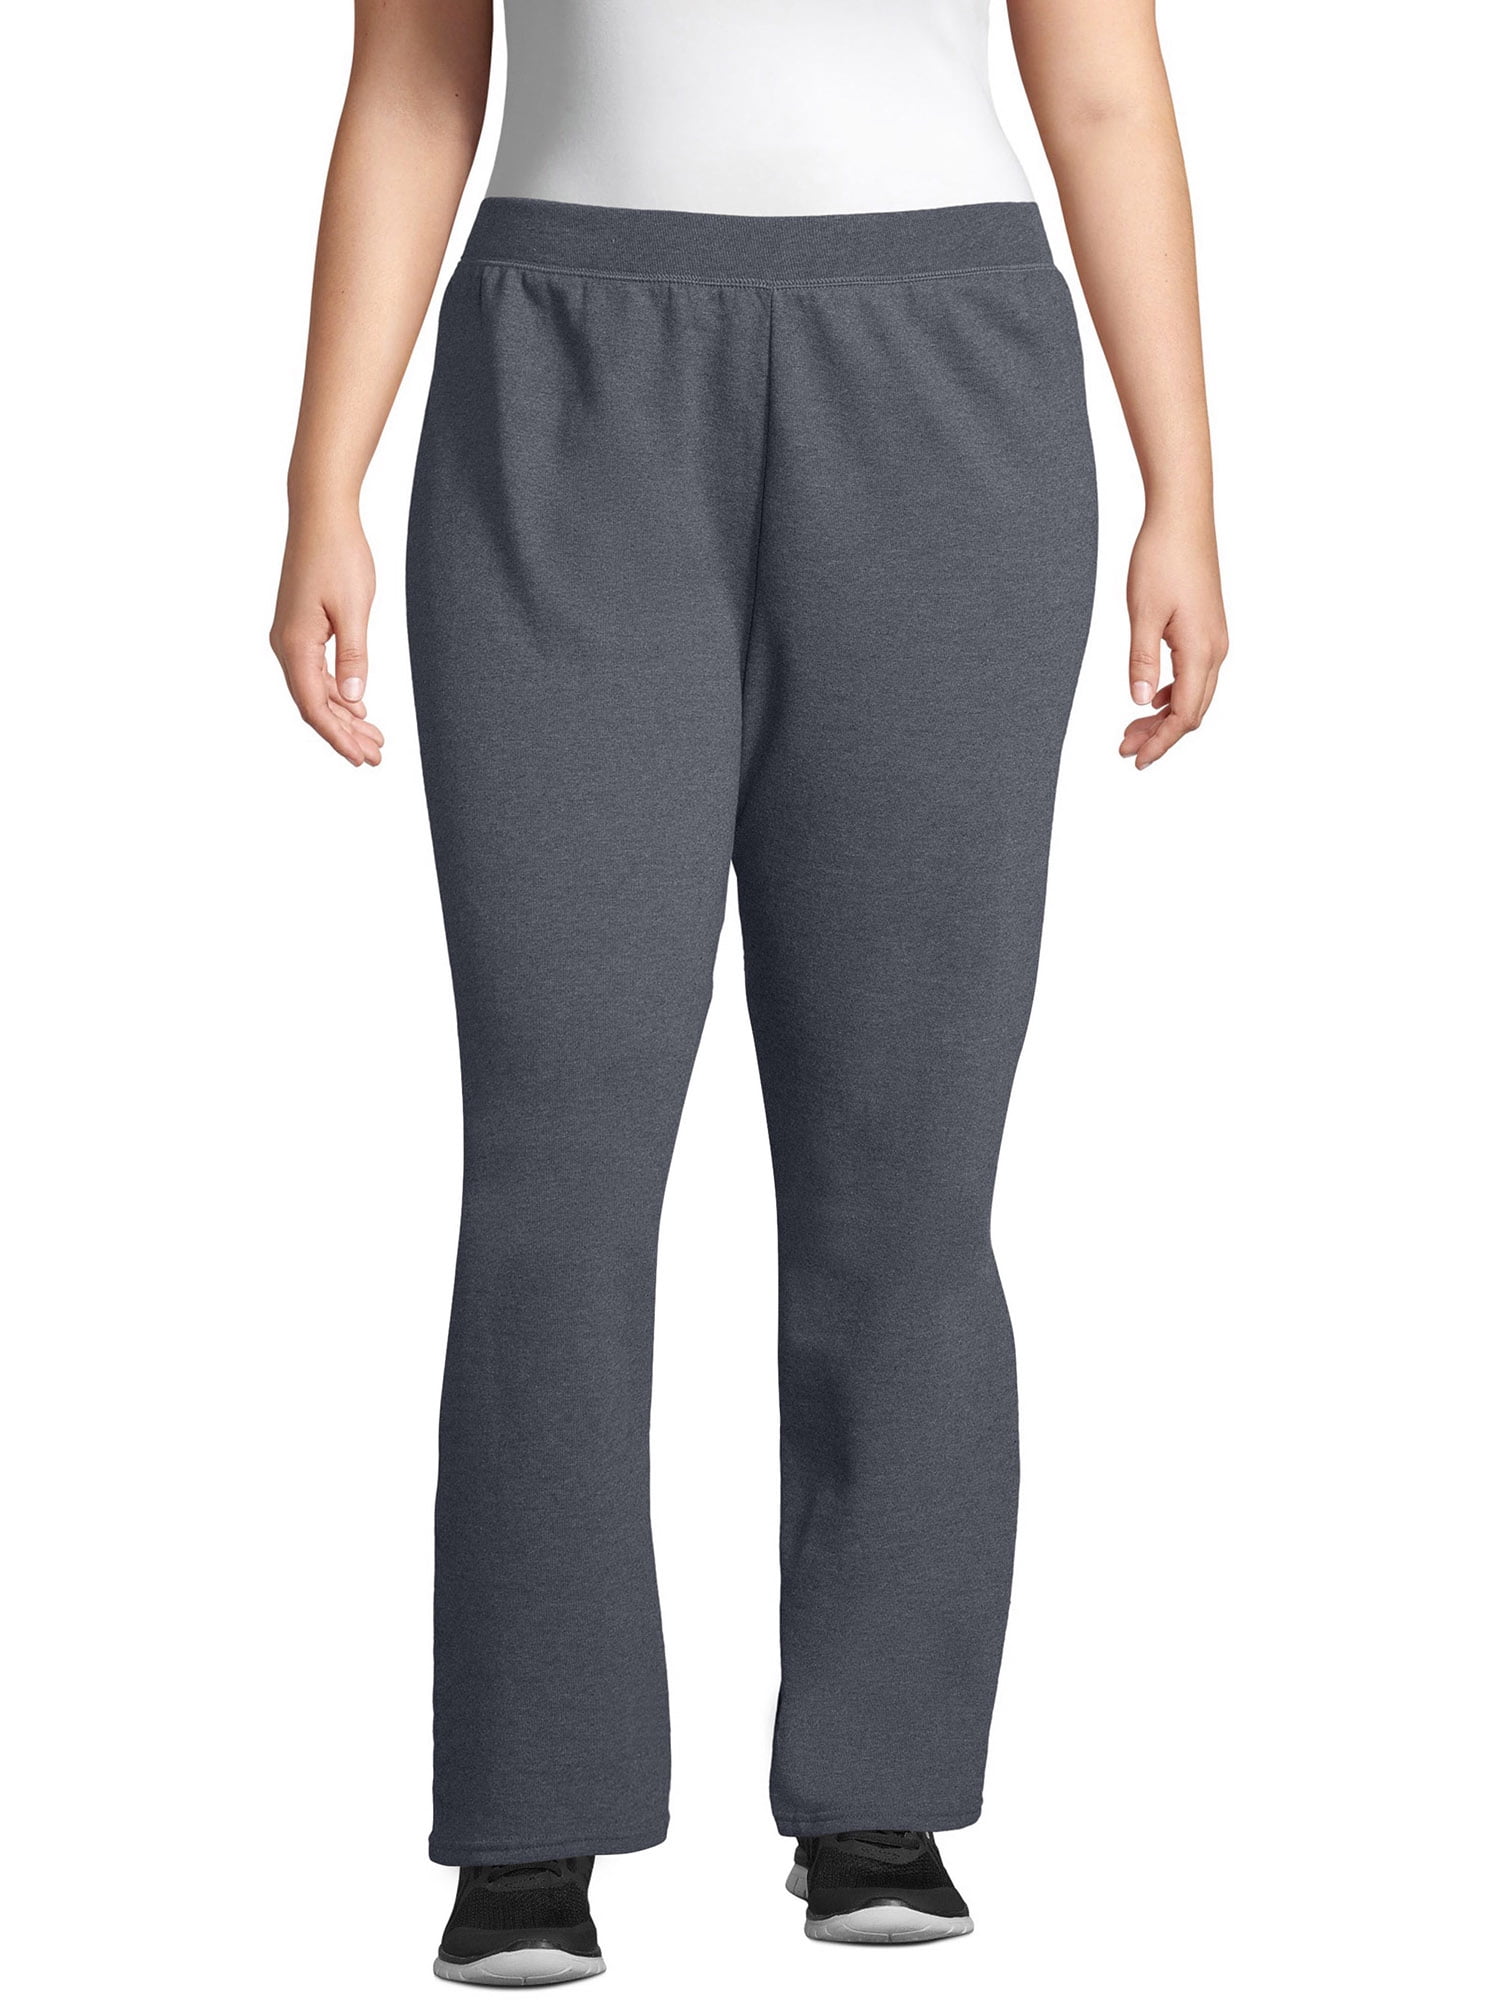 JMS by Hanes Women's Plus Size Fleece Sweatpants (Also Petite Sizes) 